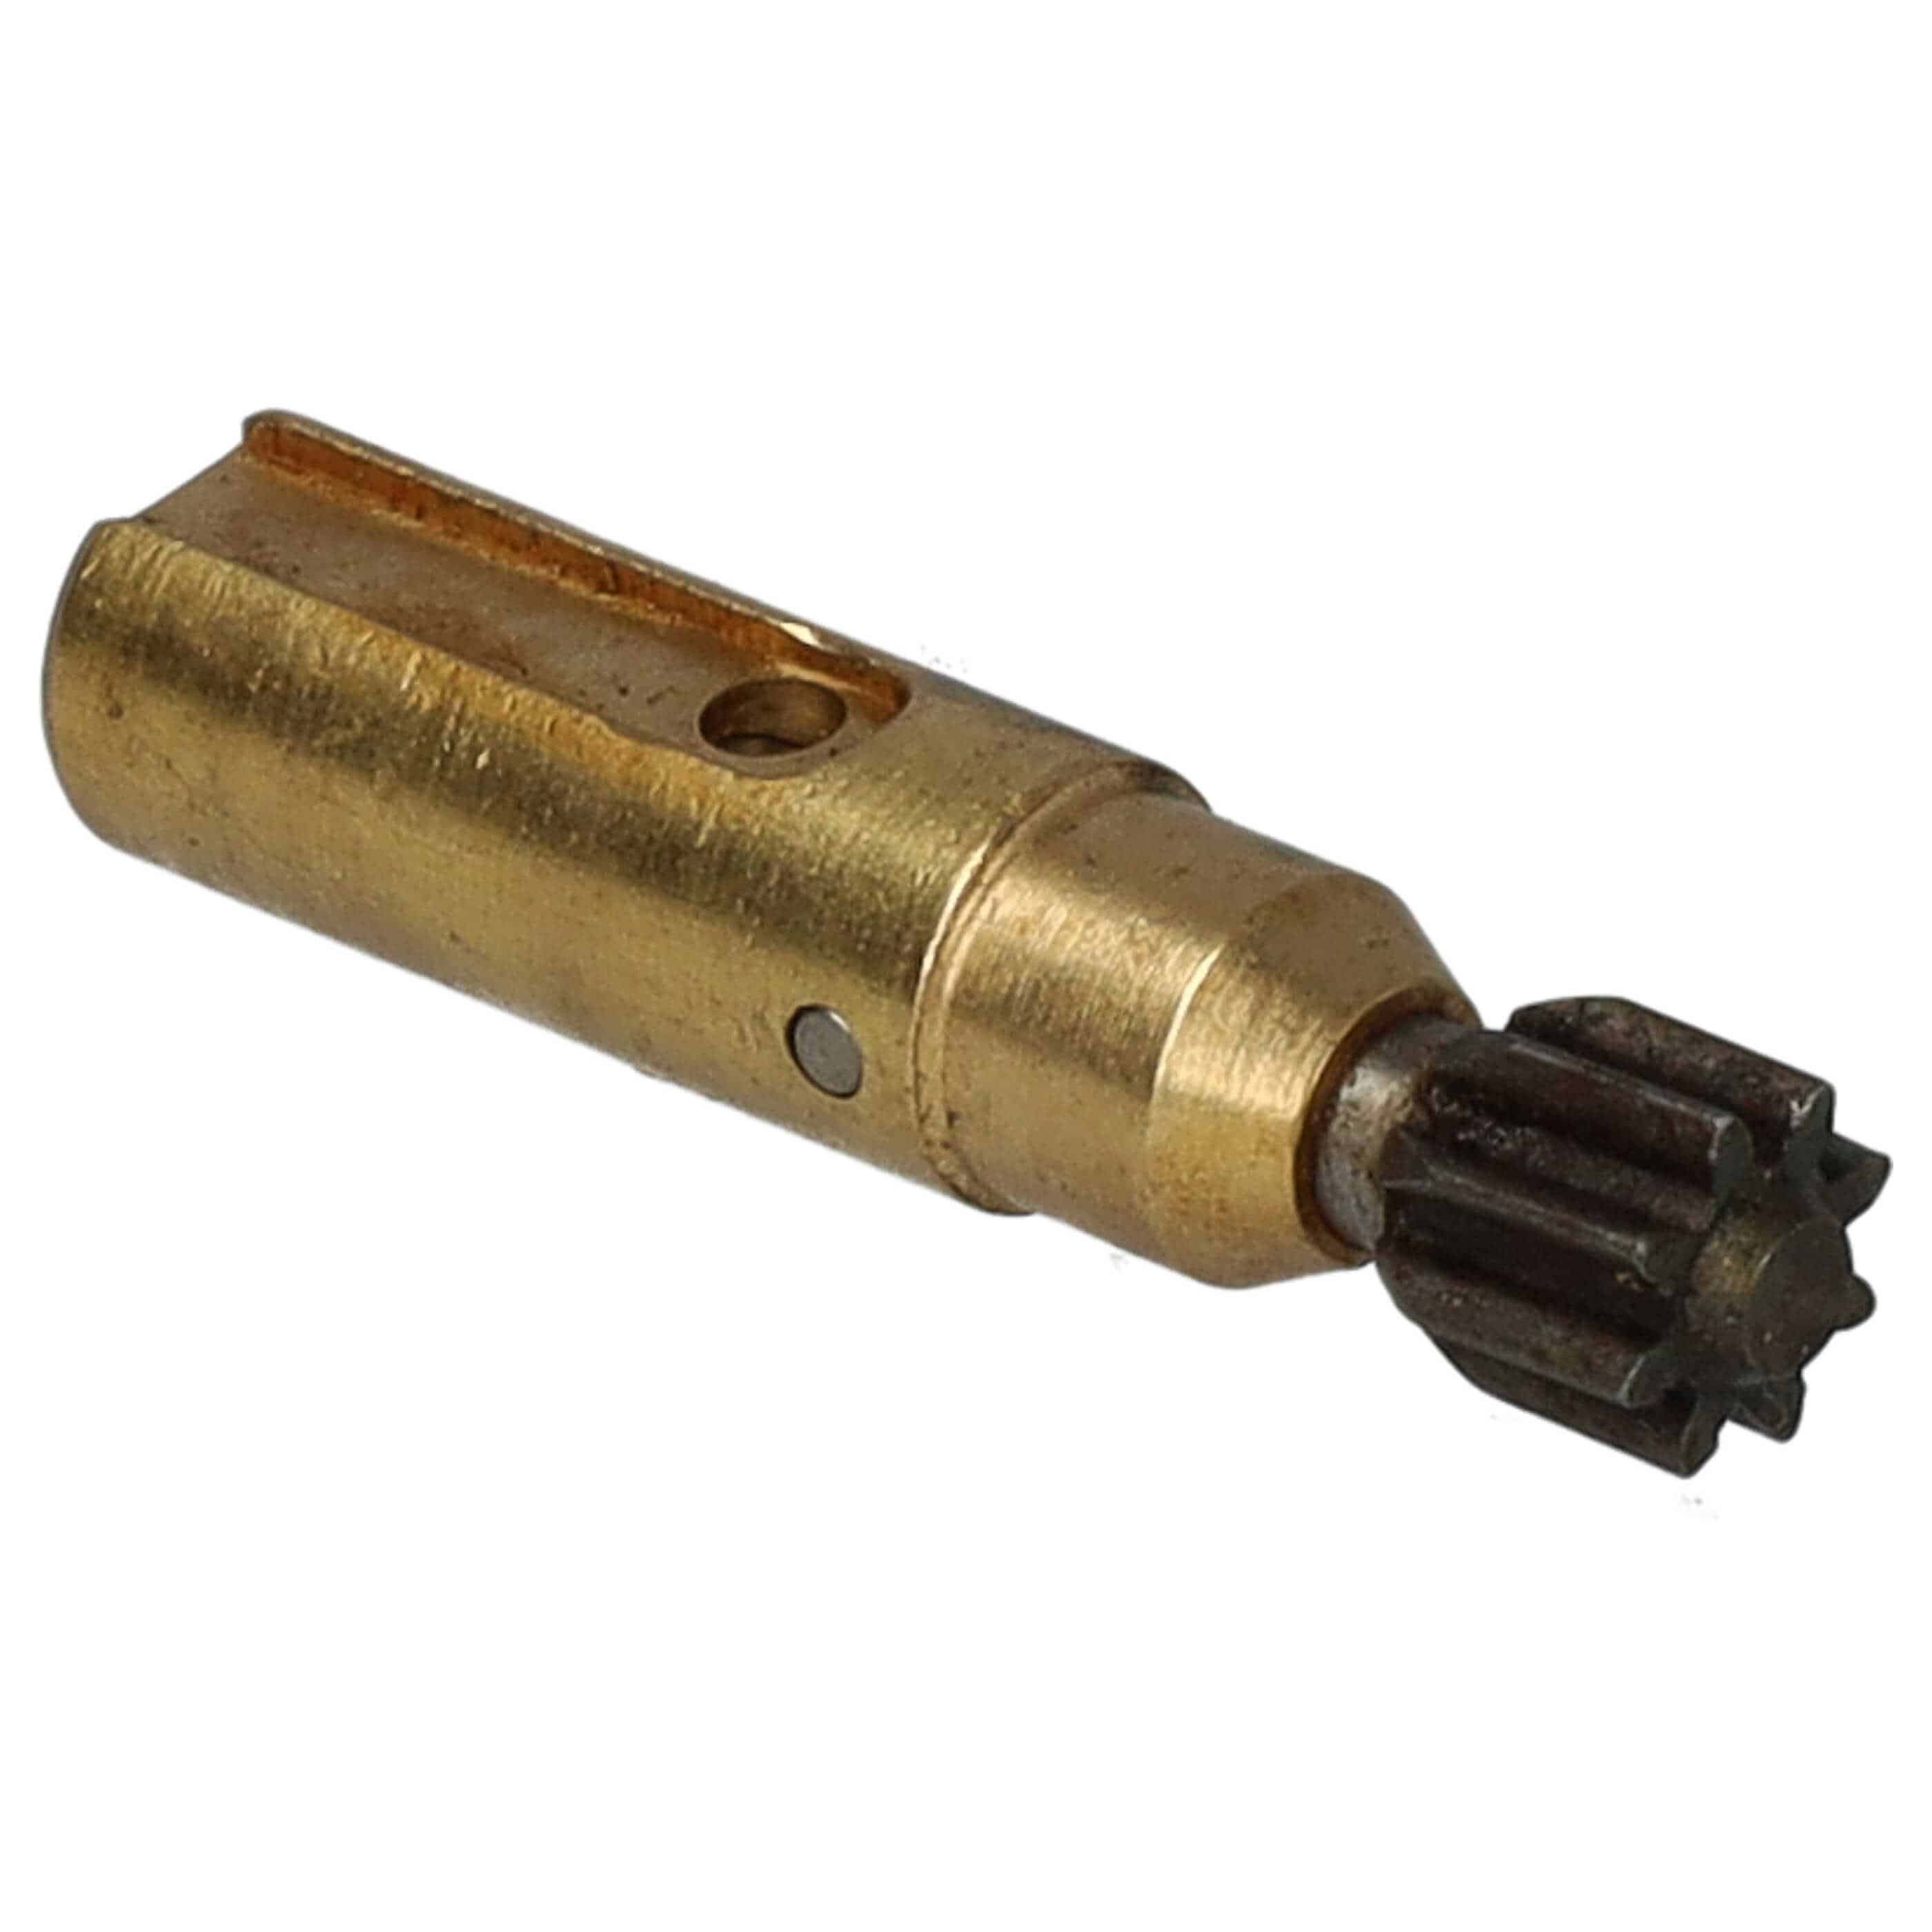 Pompa dell'olio sostituisce Stihl 1123 640 3200 - ferro, 0,8 cm diametro, regolabile 